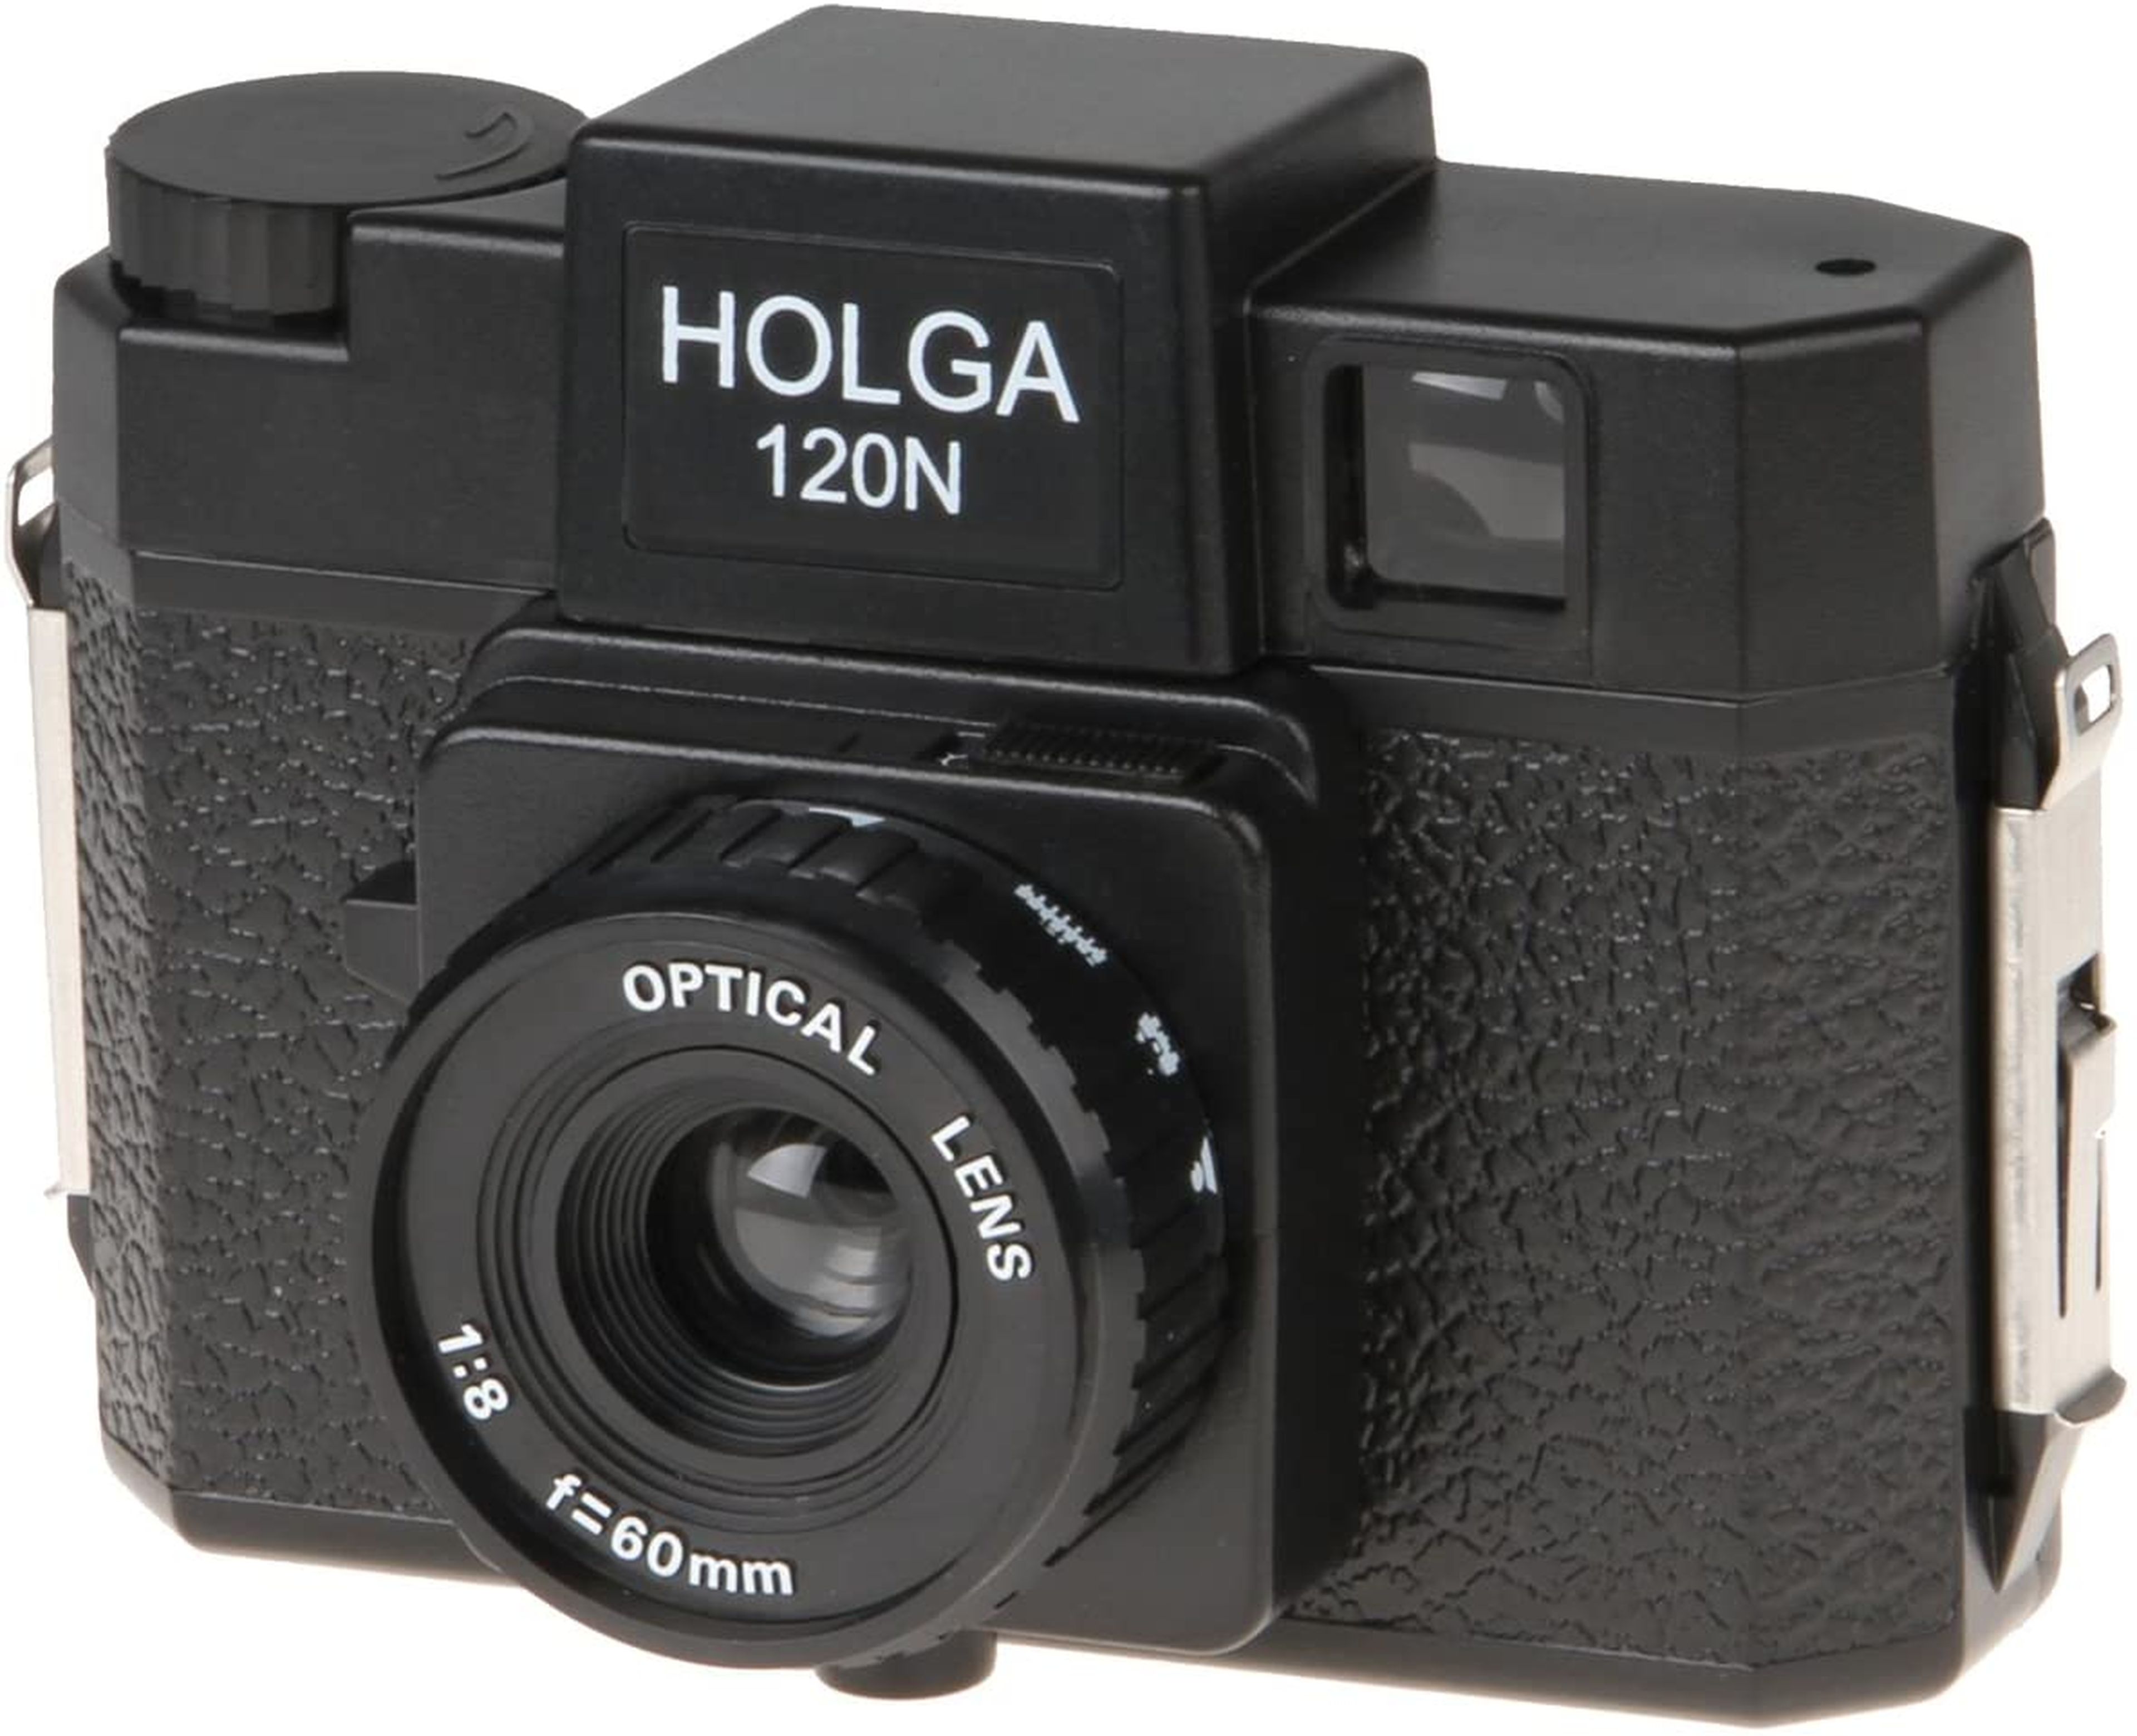 Compra la cámara analógica B.I.G Holga 120N por 50,61 euros